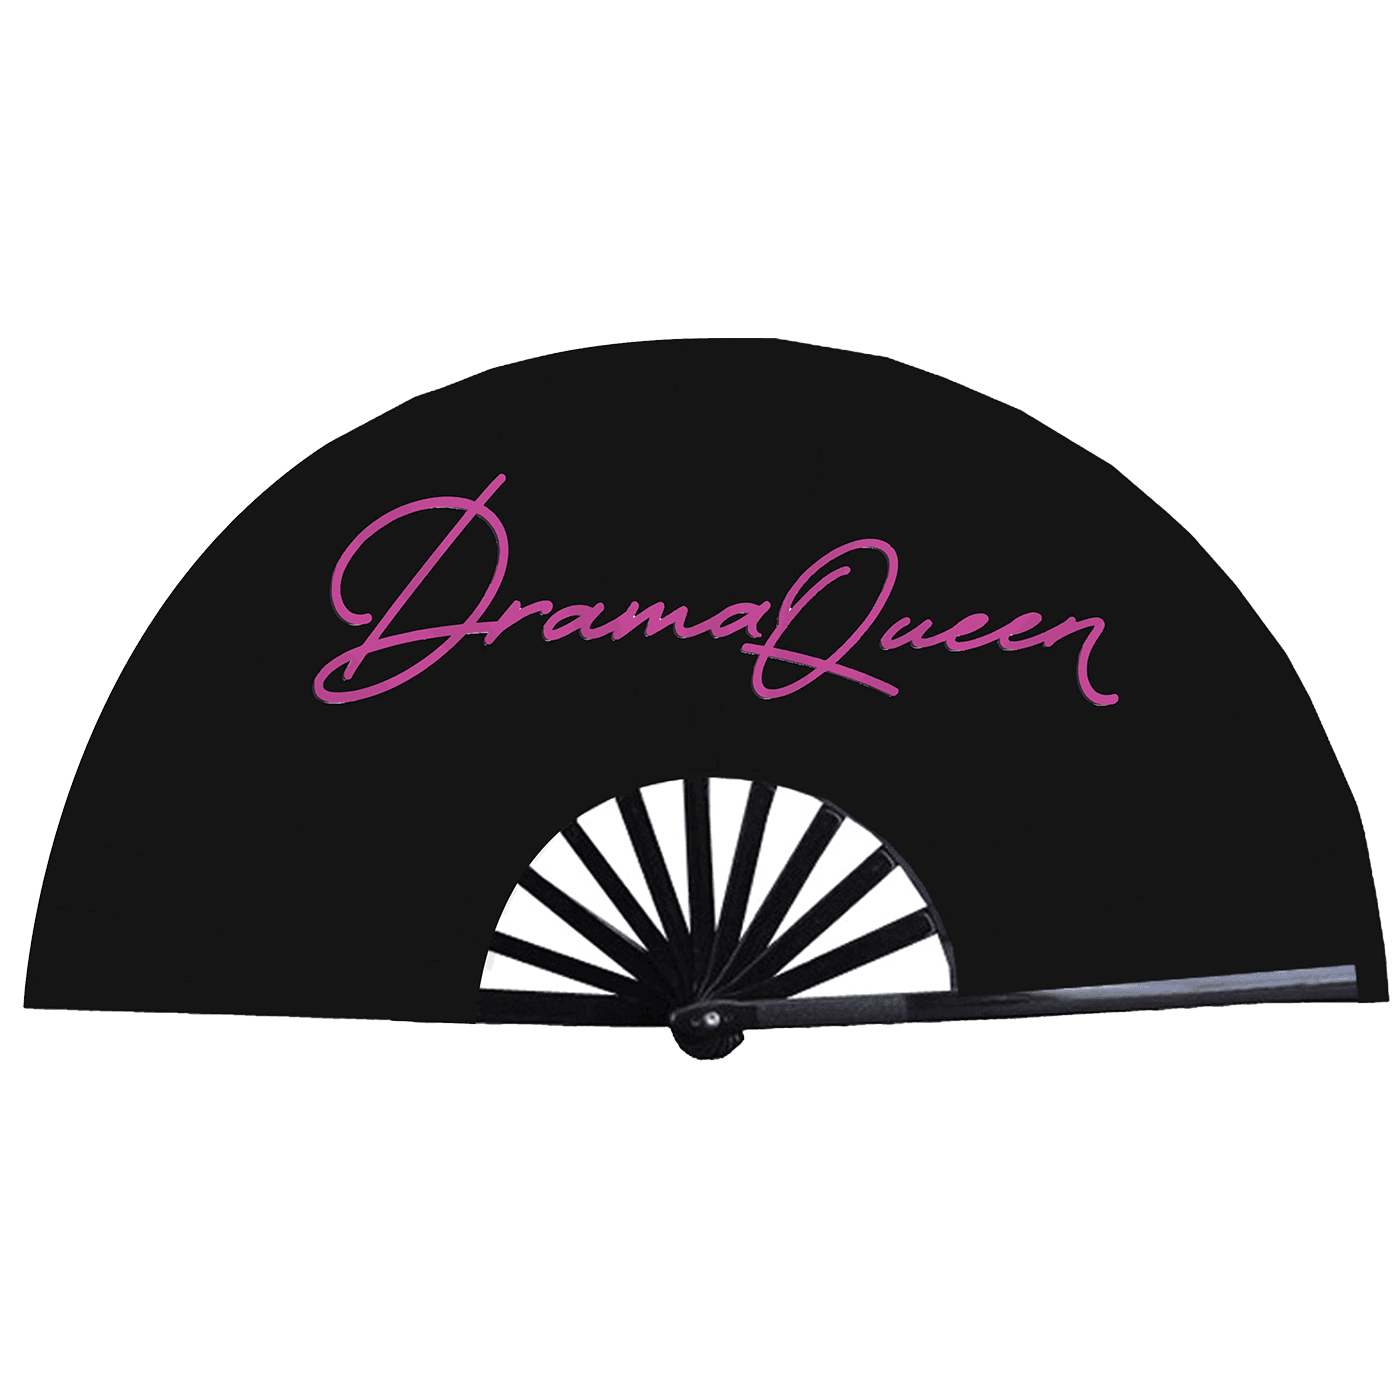 Drama Queen Handheld Folding Fan